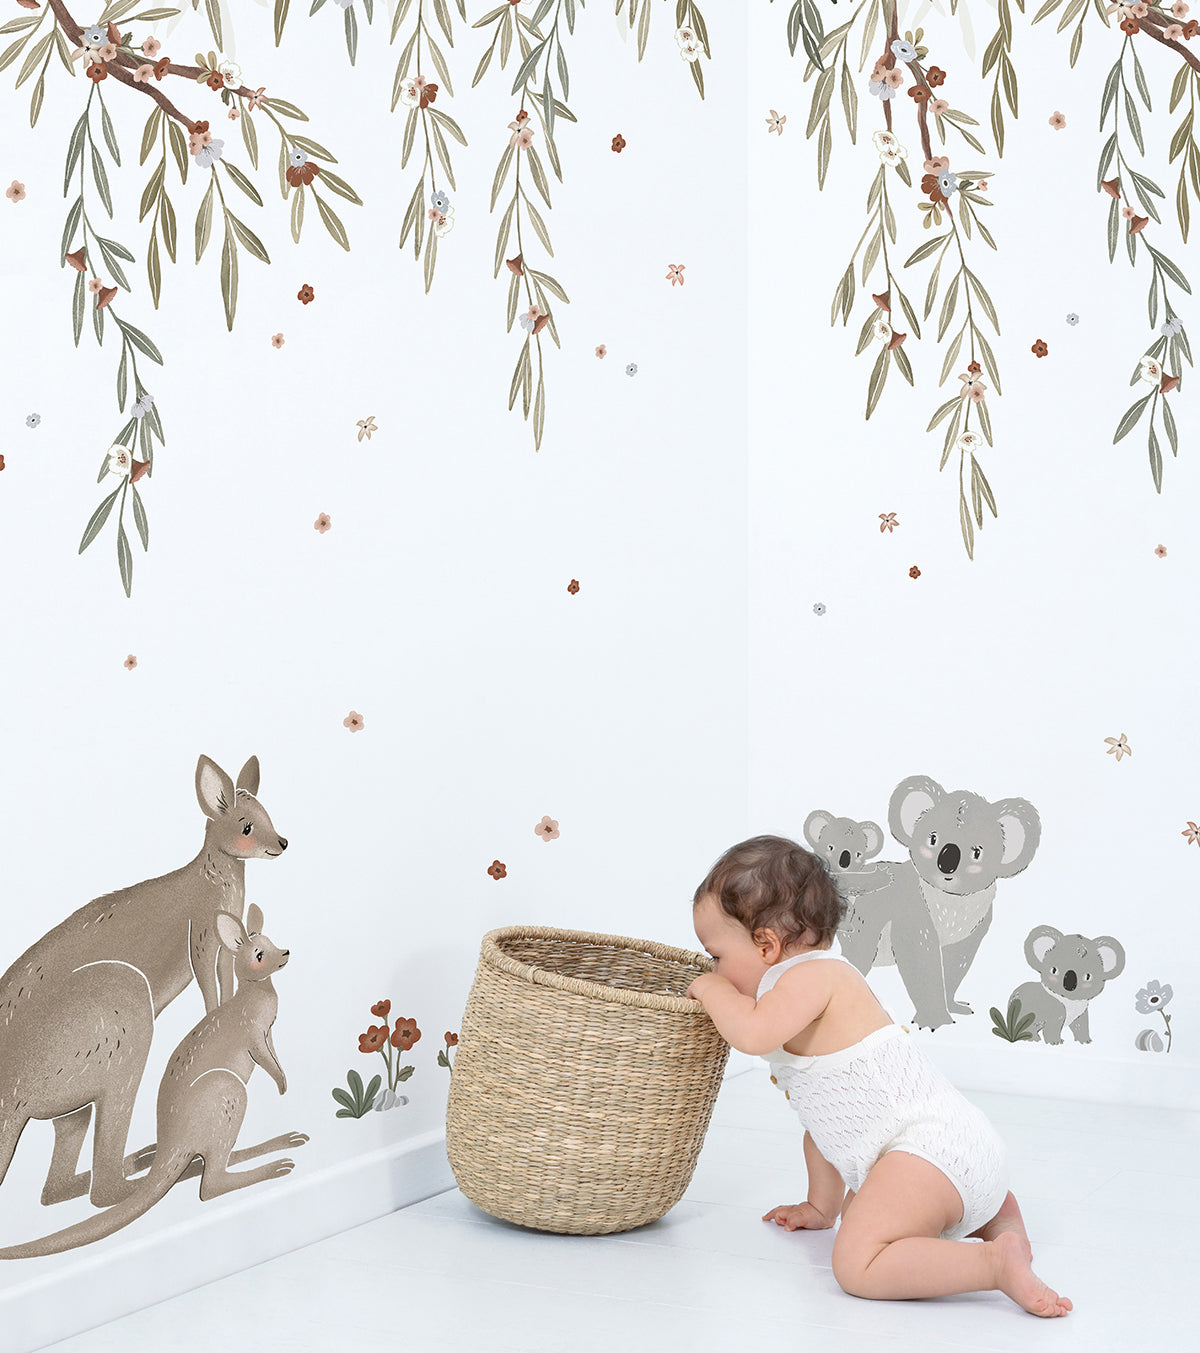 LILYDALE - Panoramic wallpaper - Eucalyptus foliage